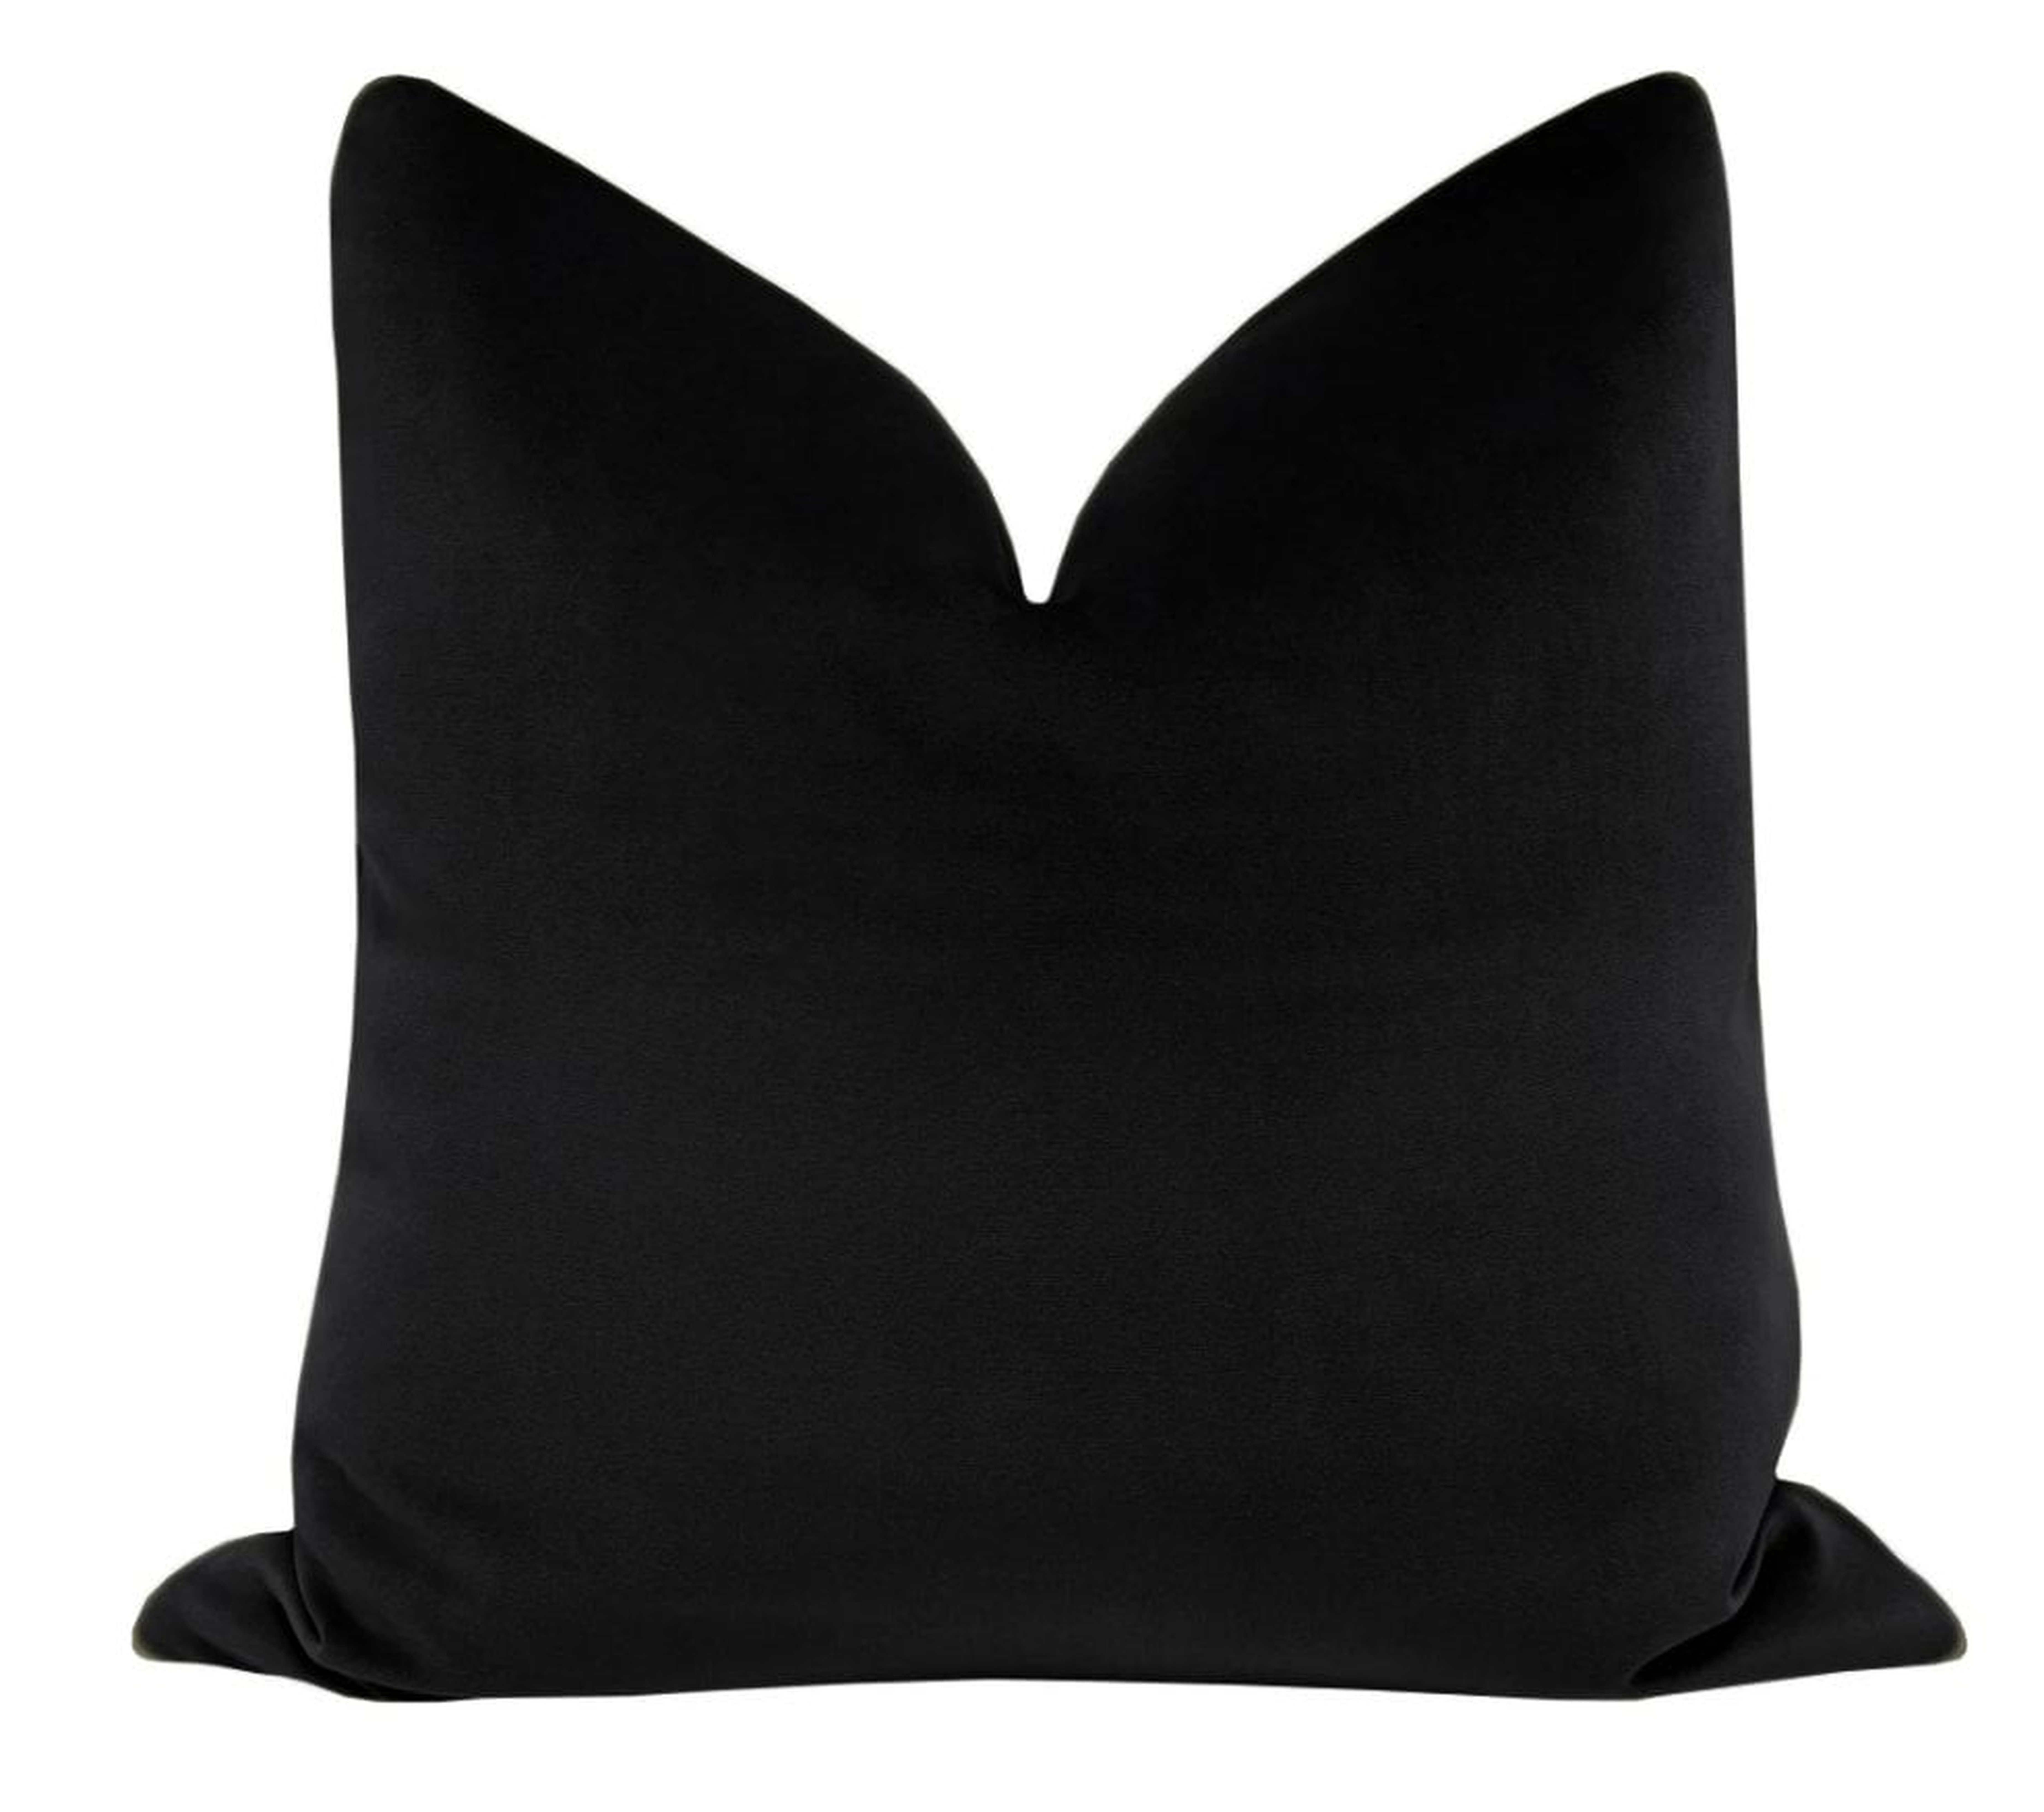 Signature Velvet Black Throw Pillow Cover - Little Design Company